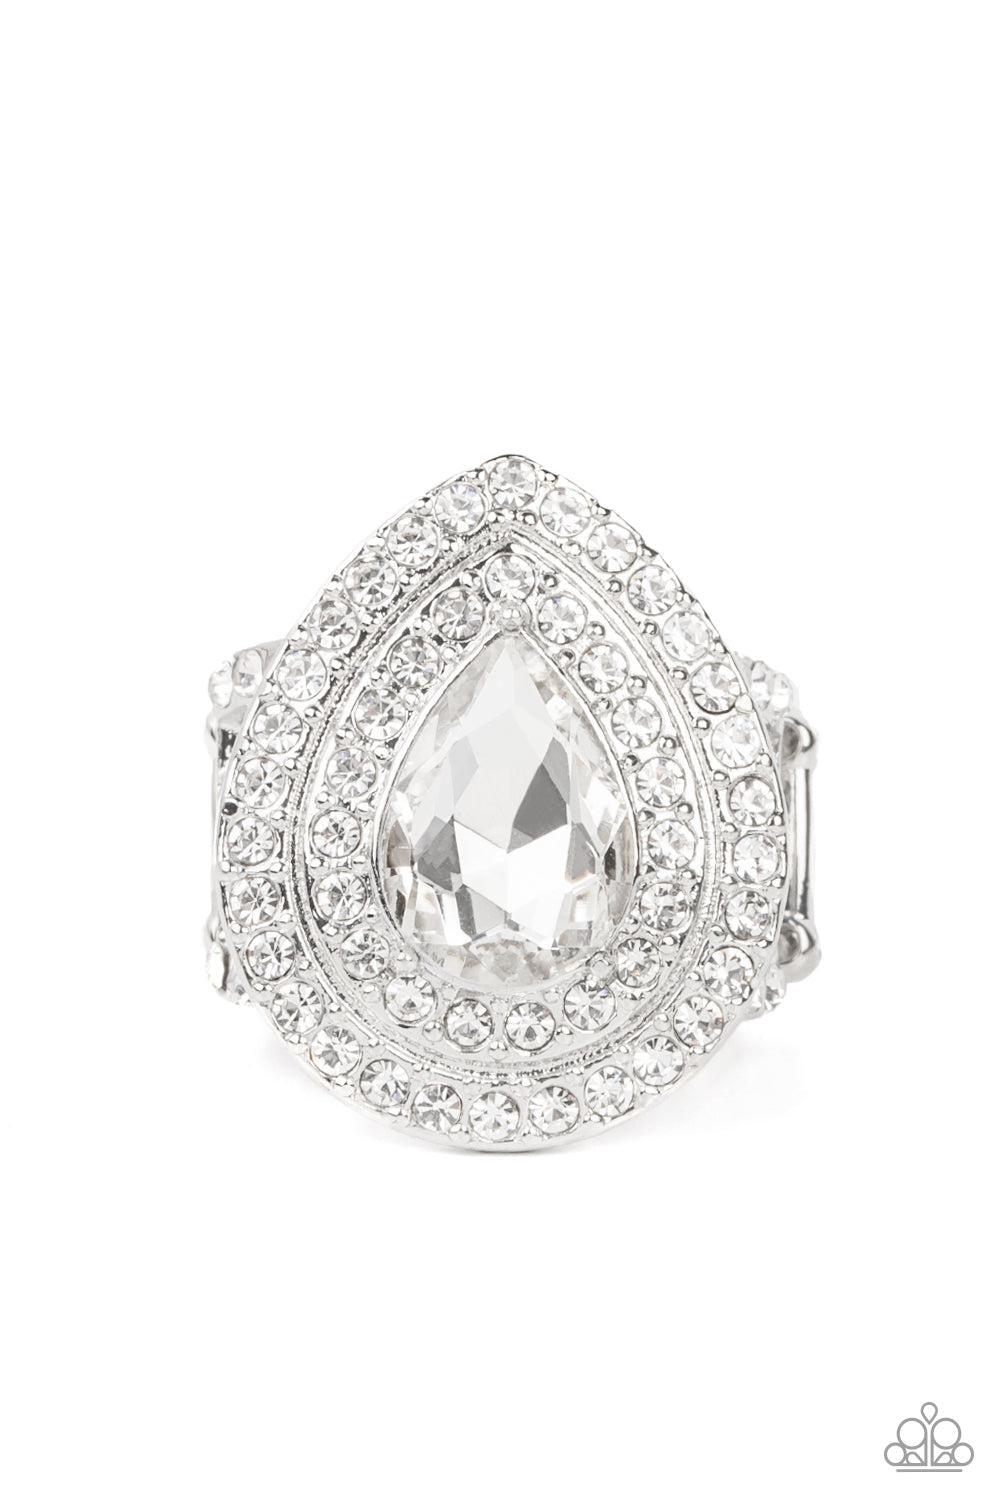 Icy Indulgence White Rhinestone Ring - Paparazzi Accessories- lightbox - CarasShop.com - $5 Jewelry by Cara Jewels